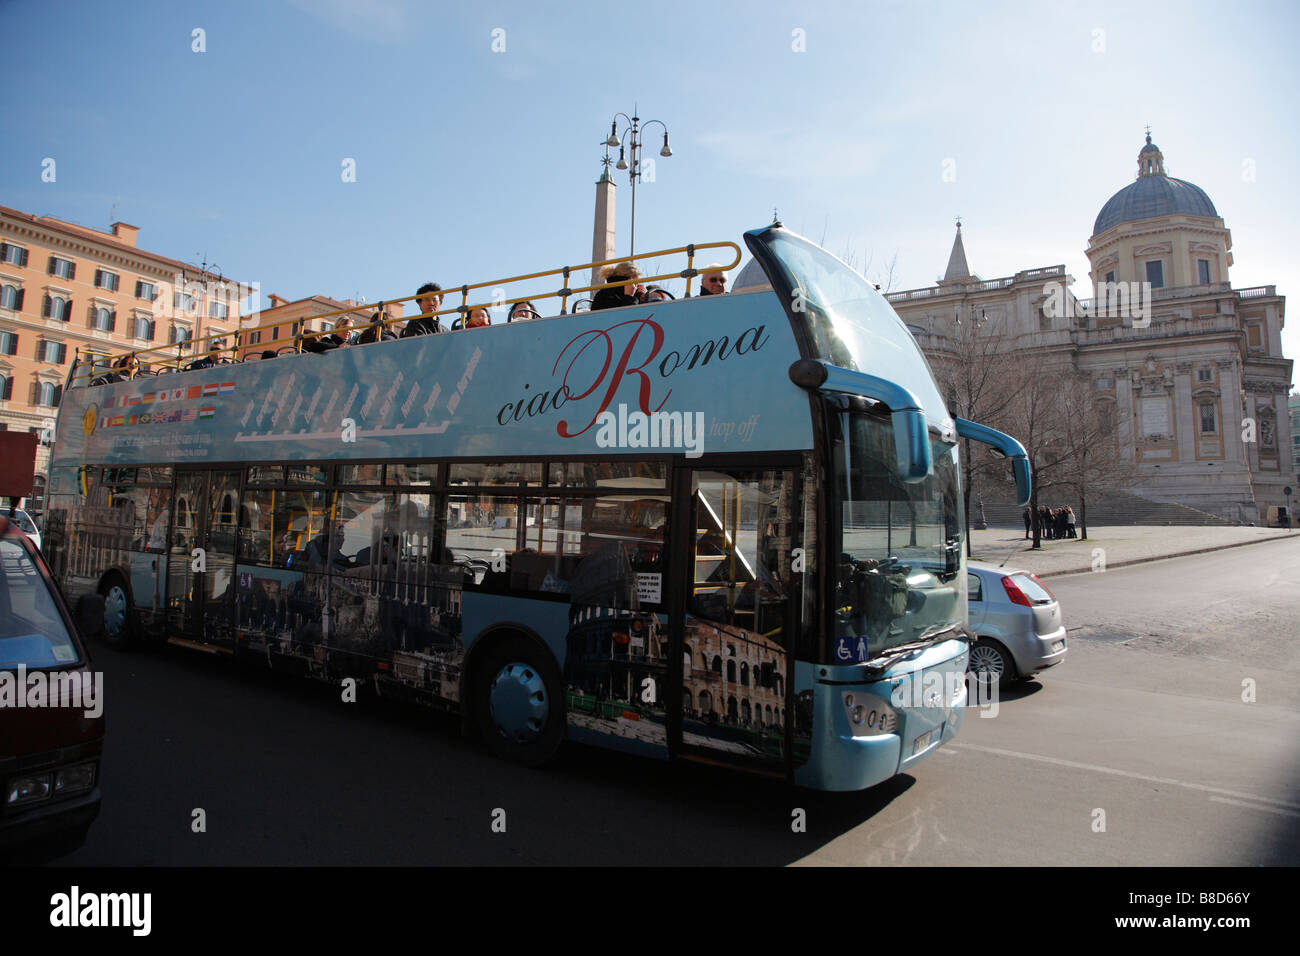 Tour en bus double decker bus, Roma, Italia Foto de stock